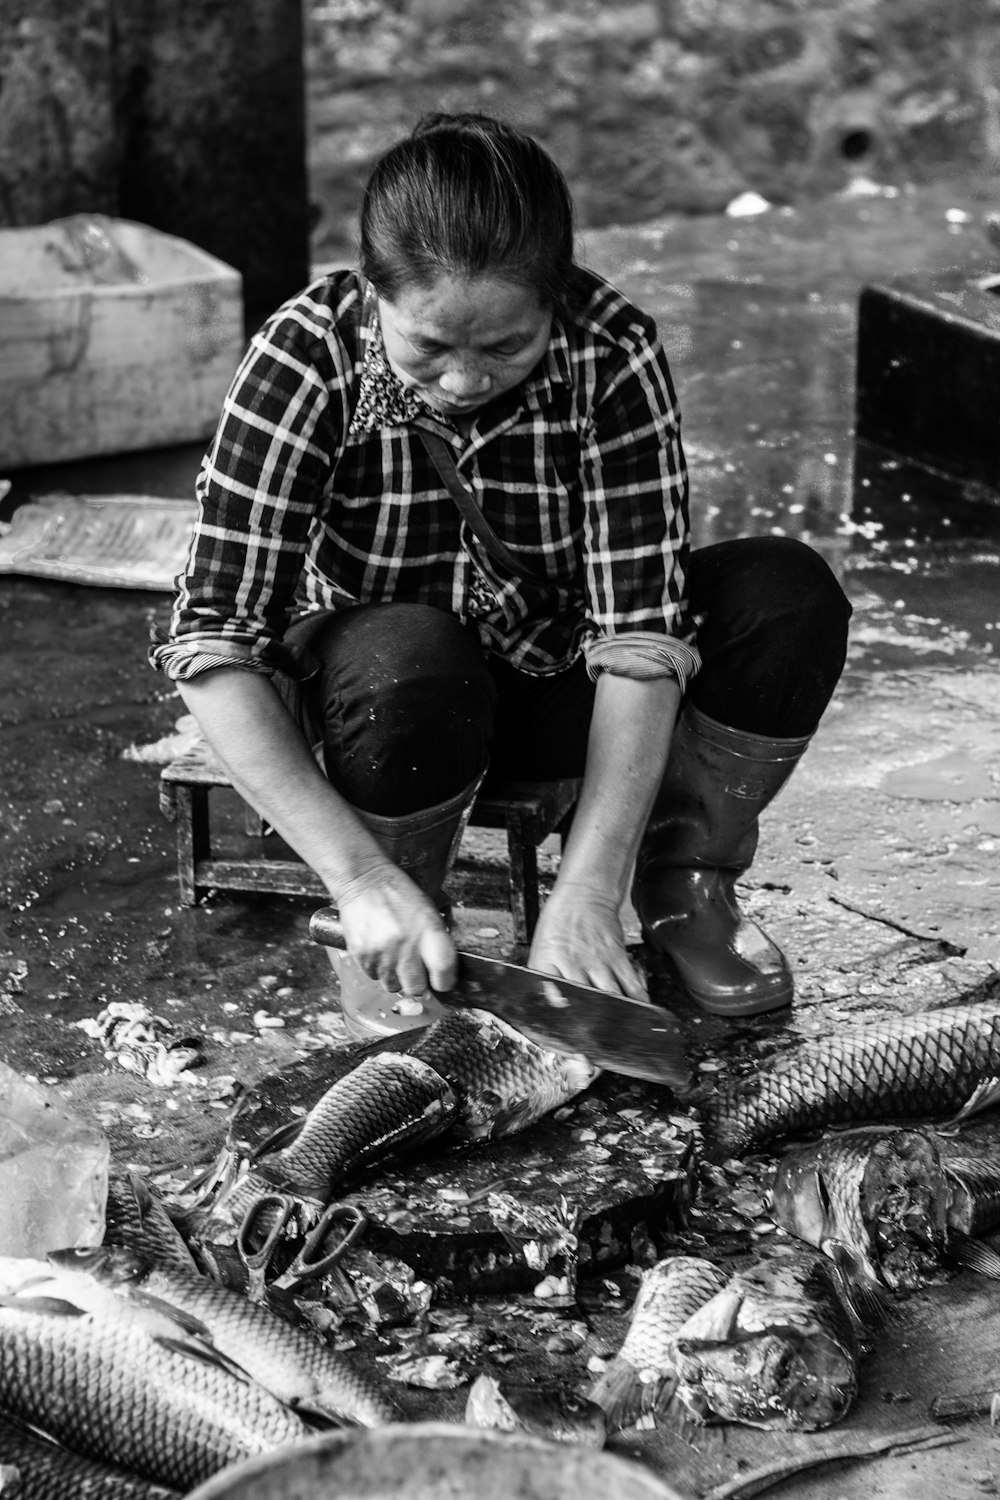 woman sitting and slicing fish